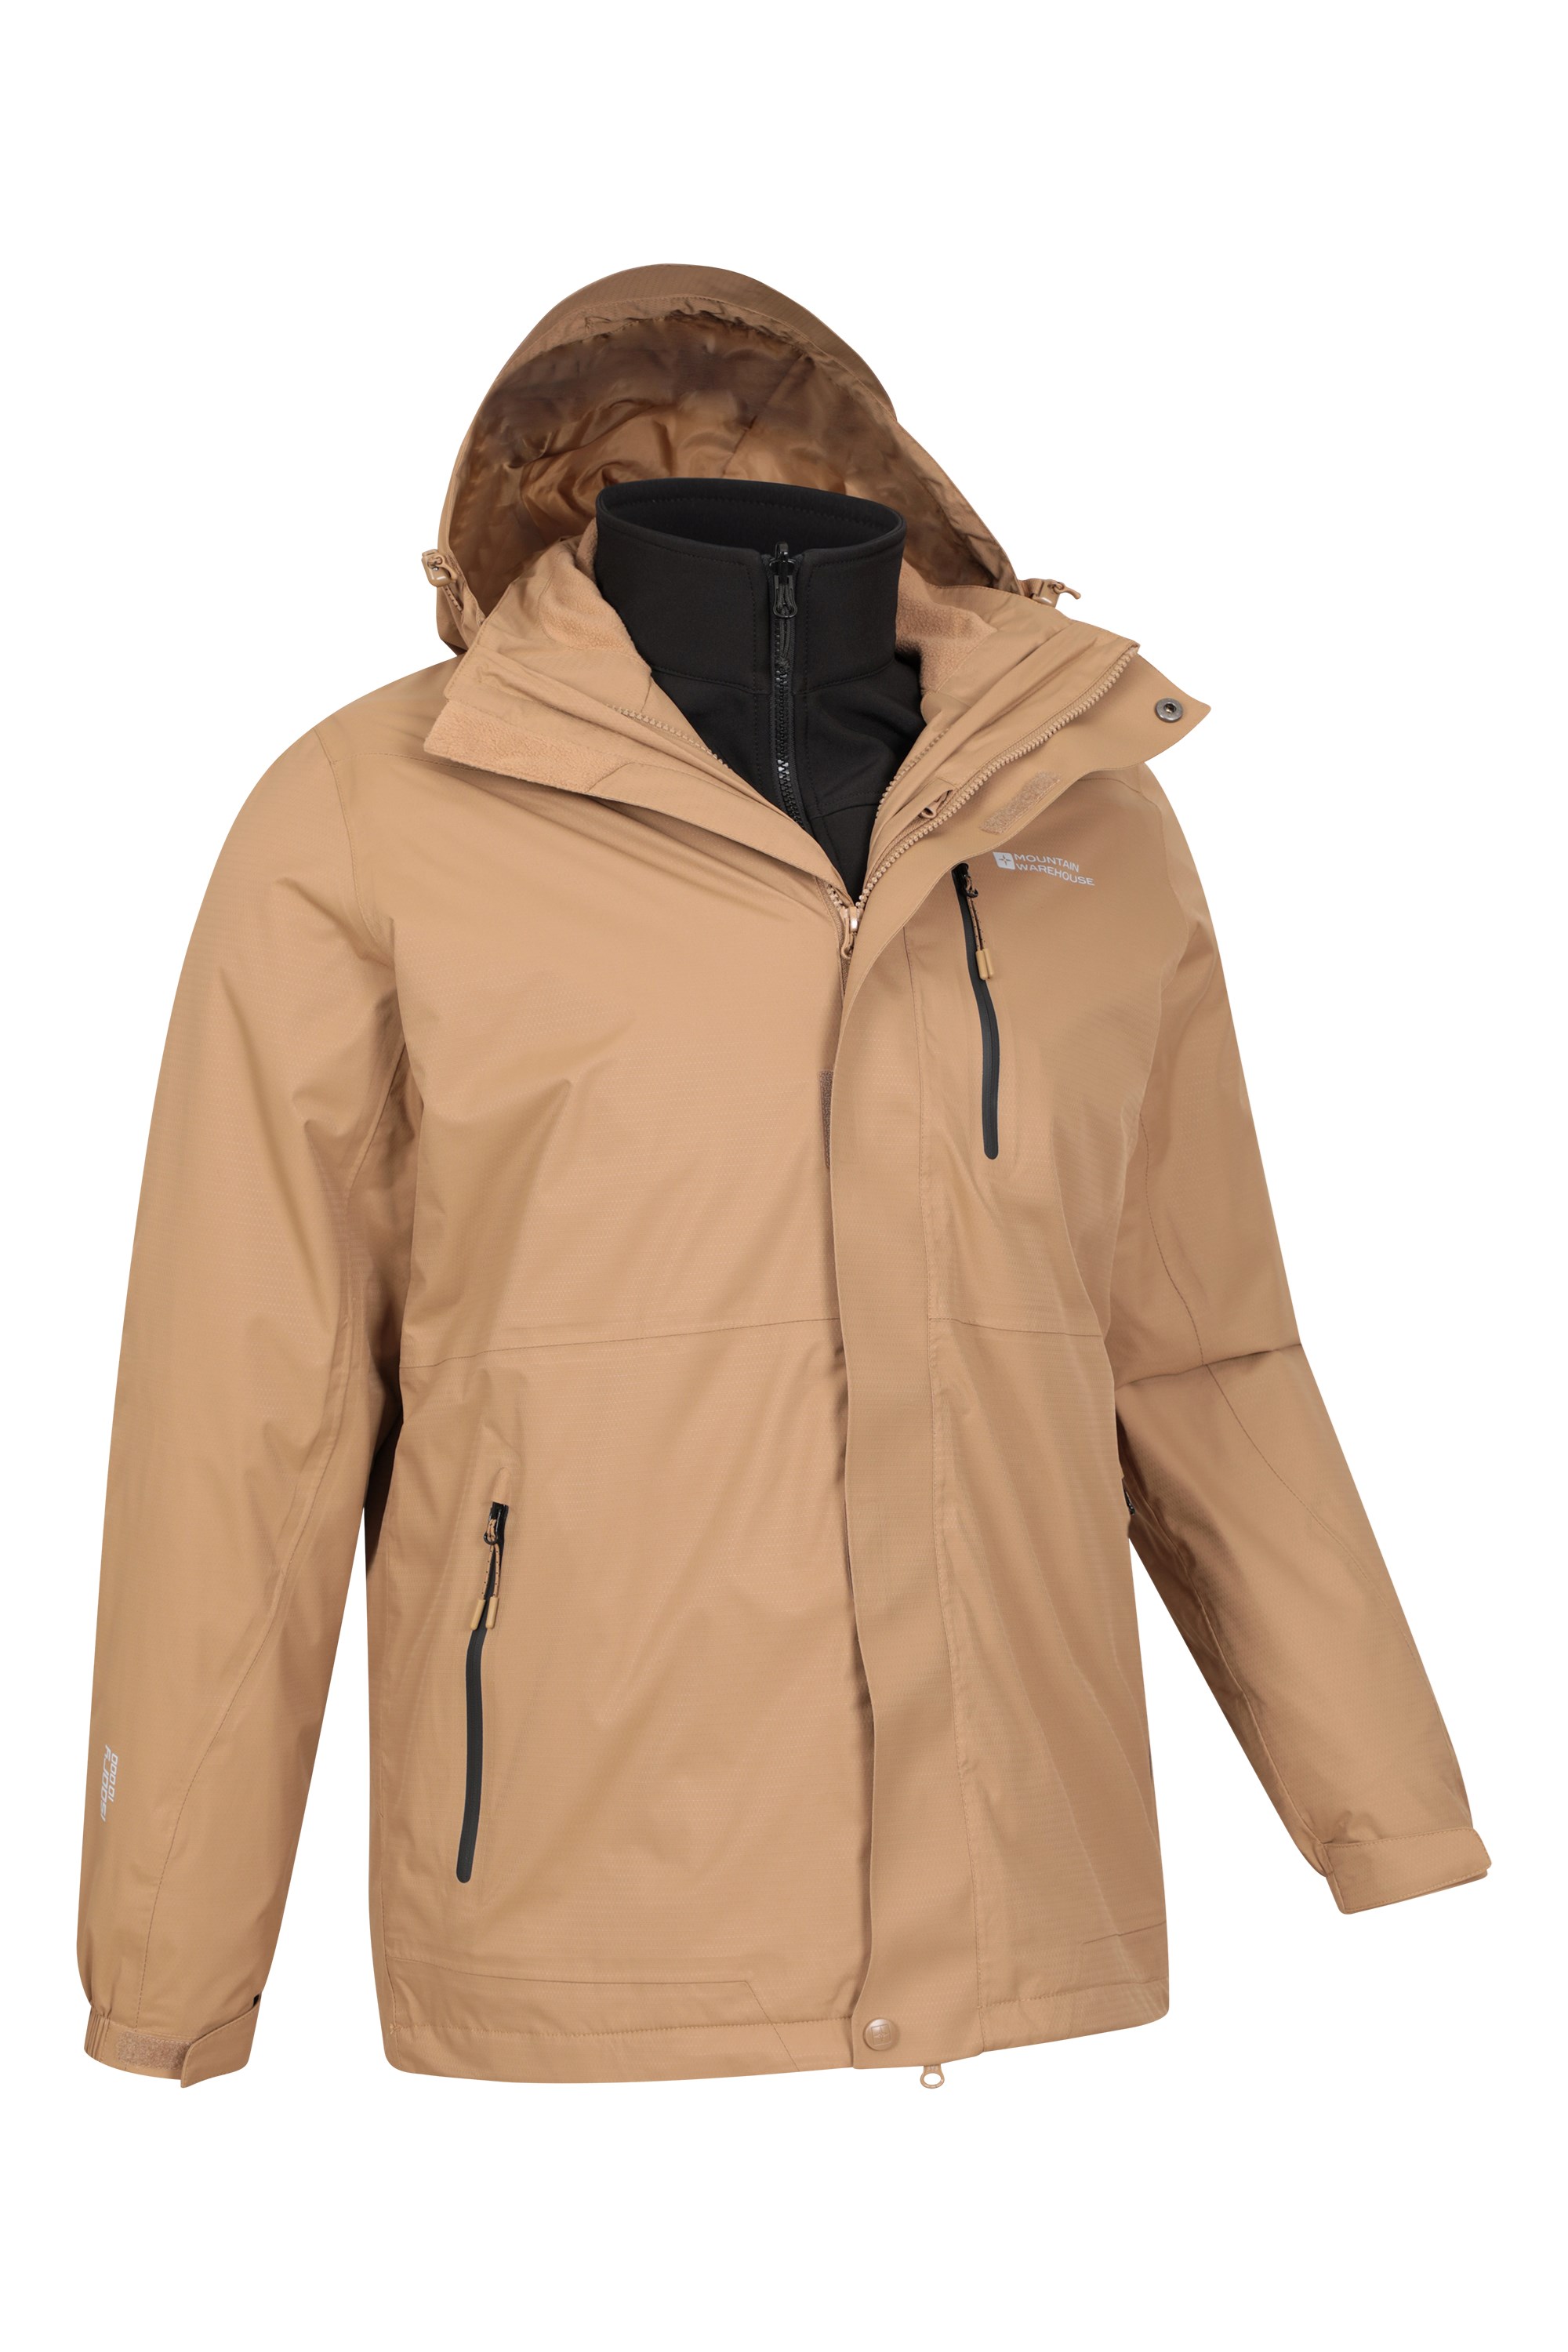 Adjustable Mens Coat Phciy Mens 3 in 1 Waterproof Jacket Warm Ski Jacket Winter Warm with Detachable Hood Windproof Camping Hiking Coat 